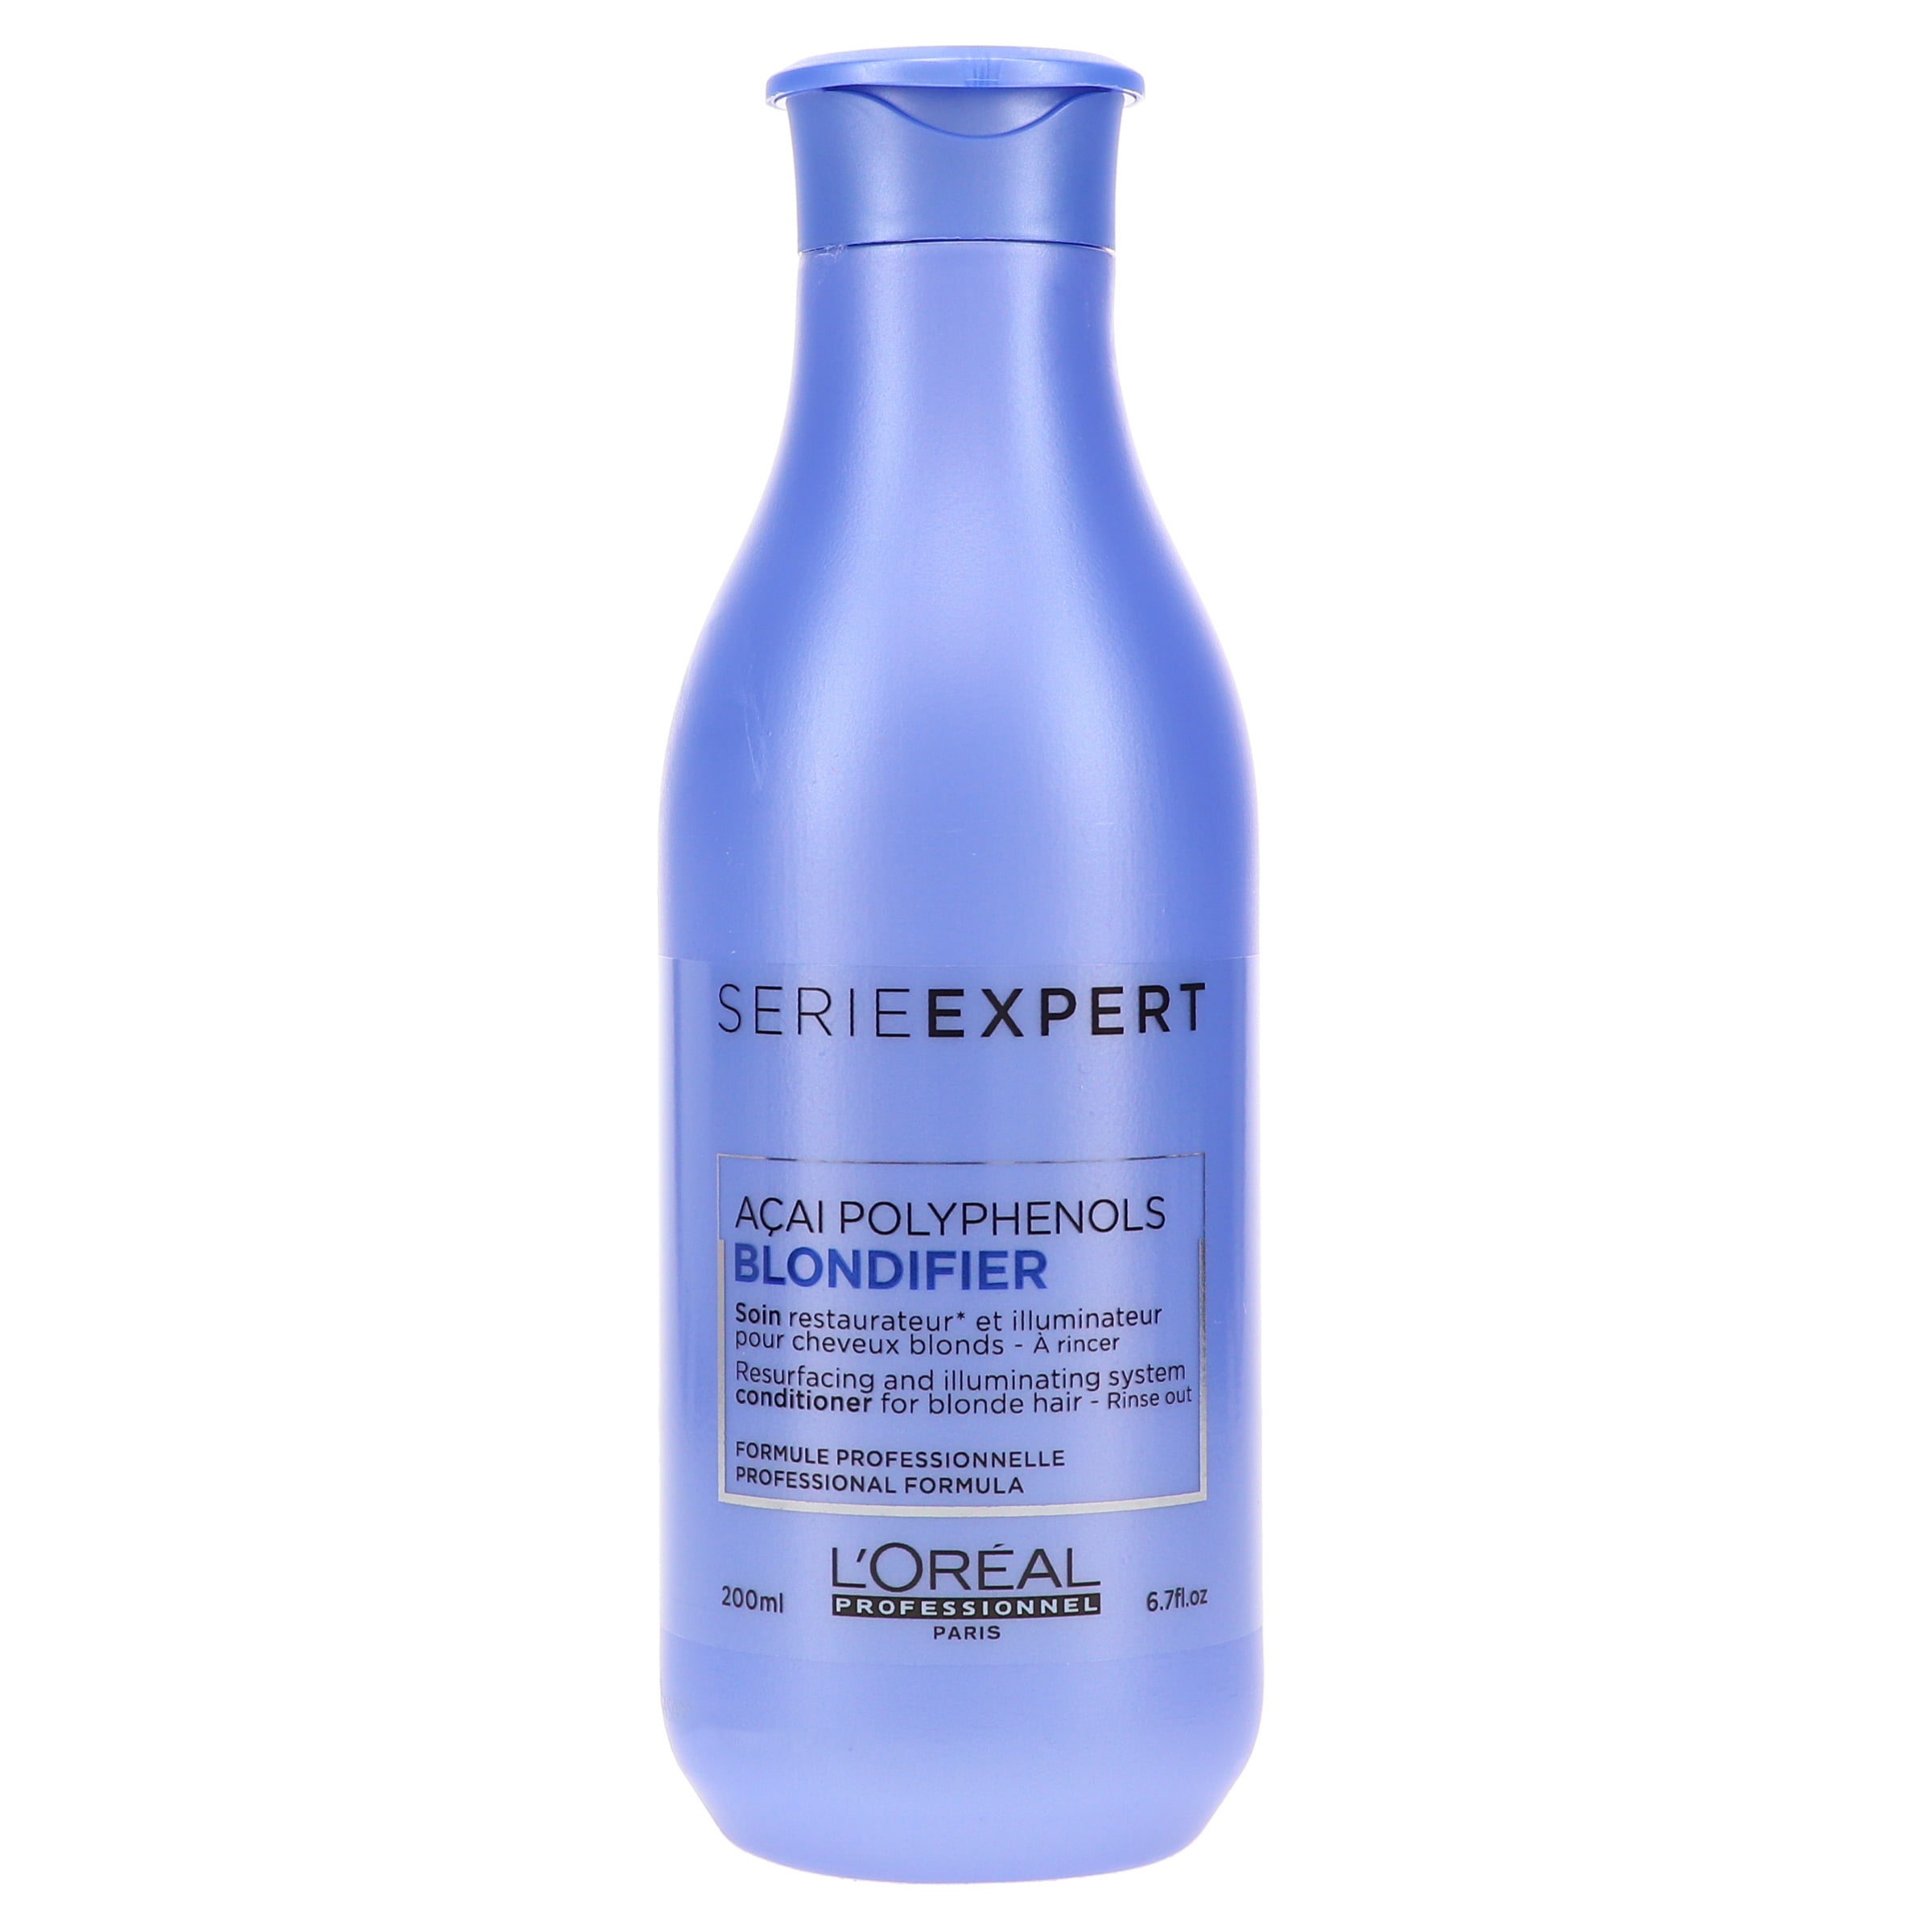 L'Oreal Professional Champú Blondifier Gloss 300ml - Ultrabelleza